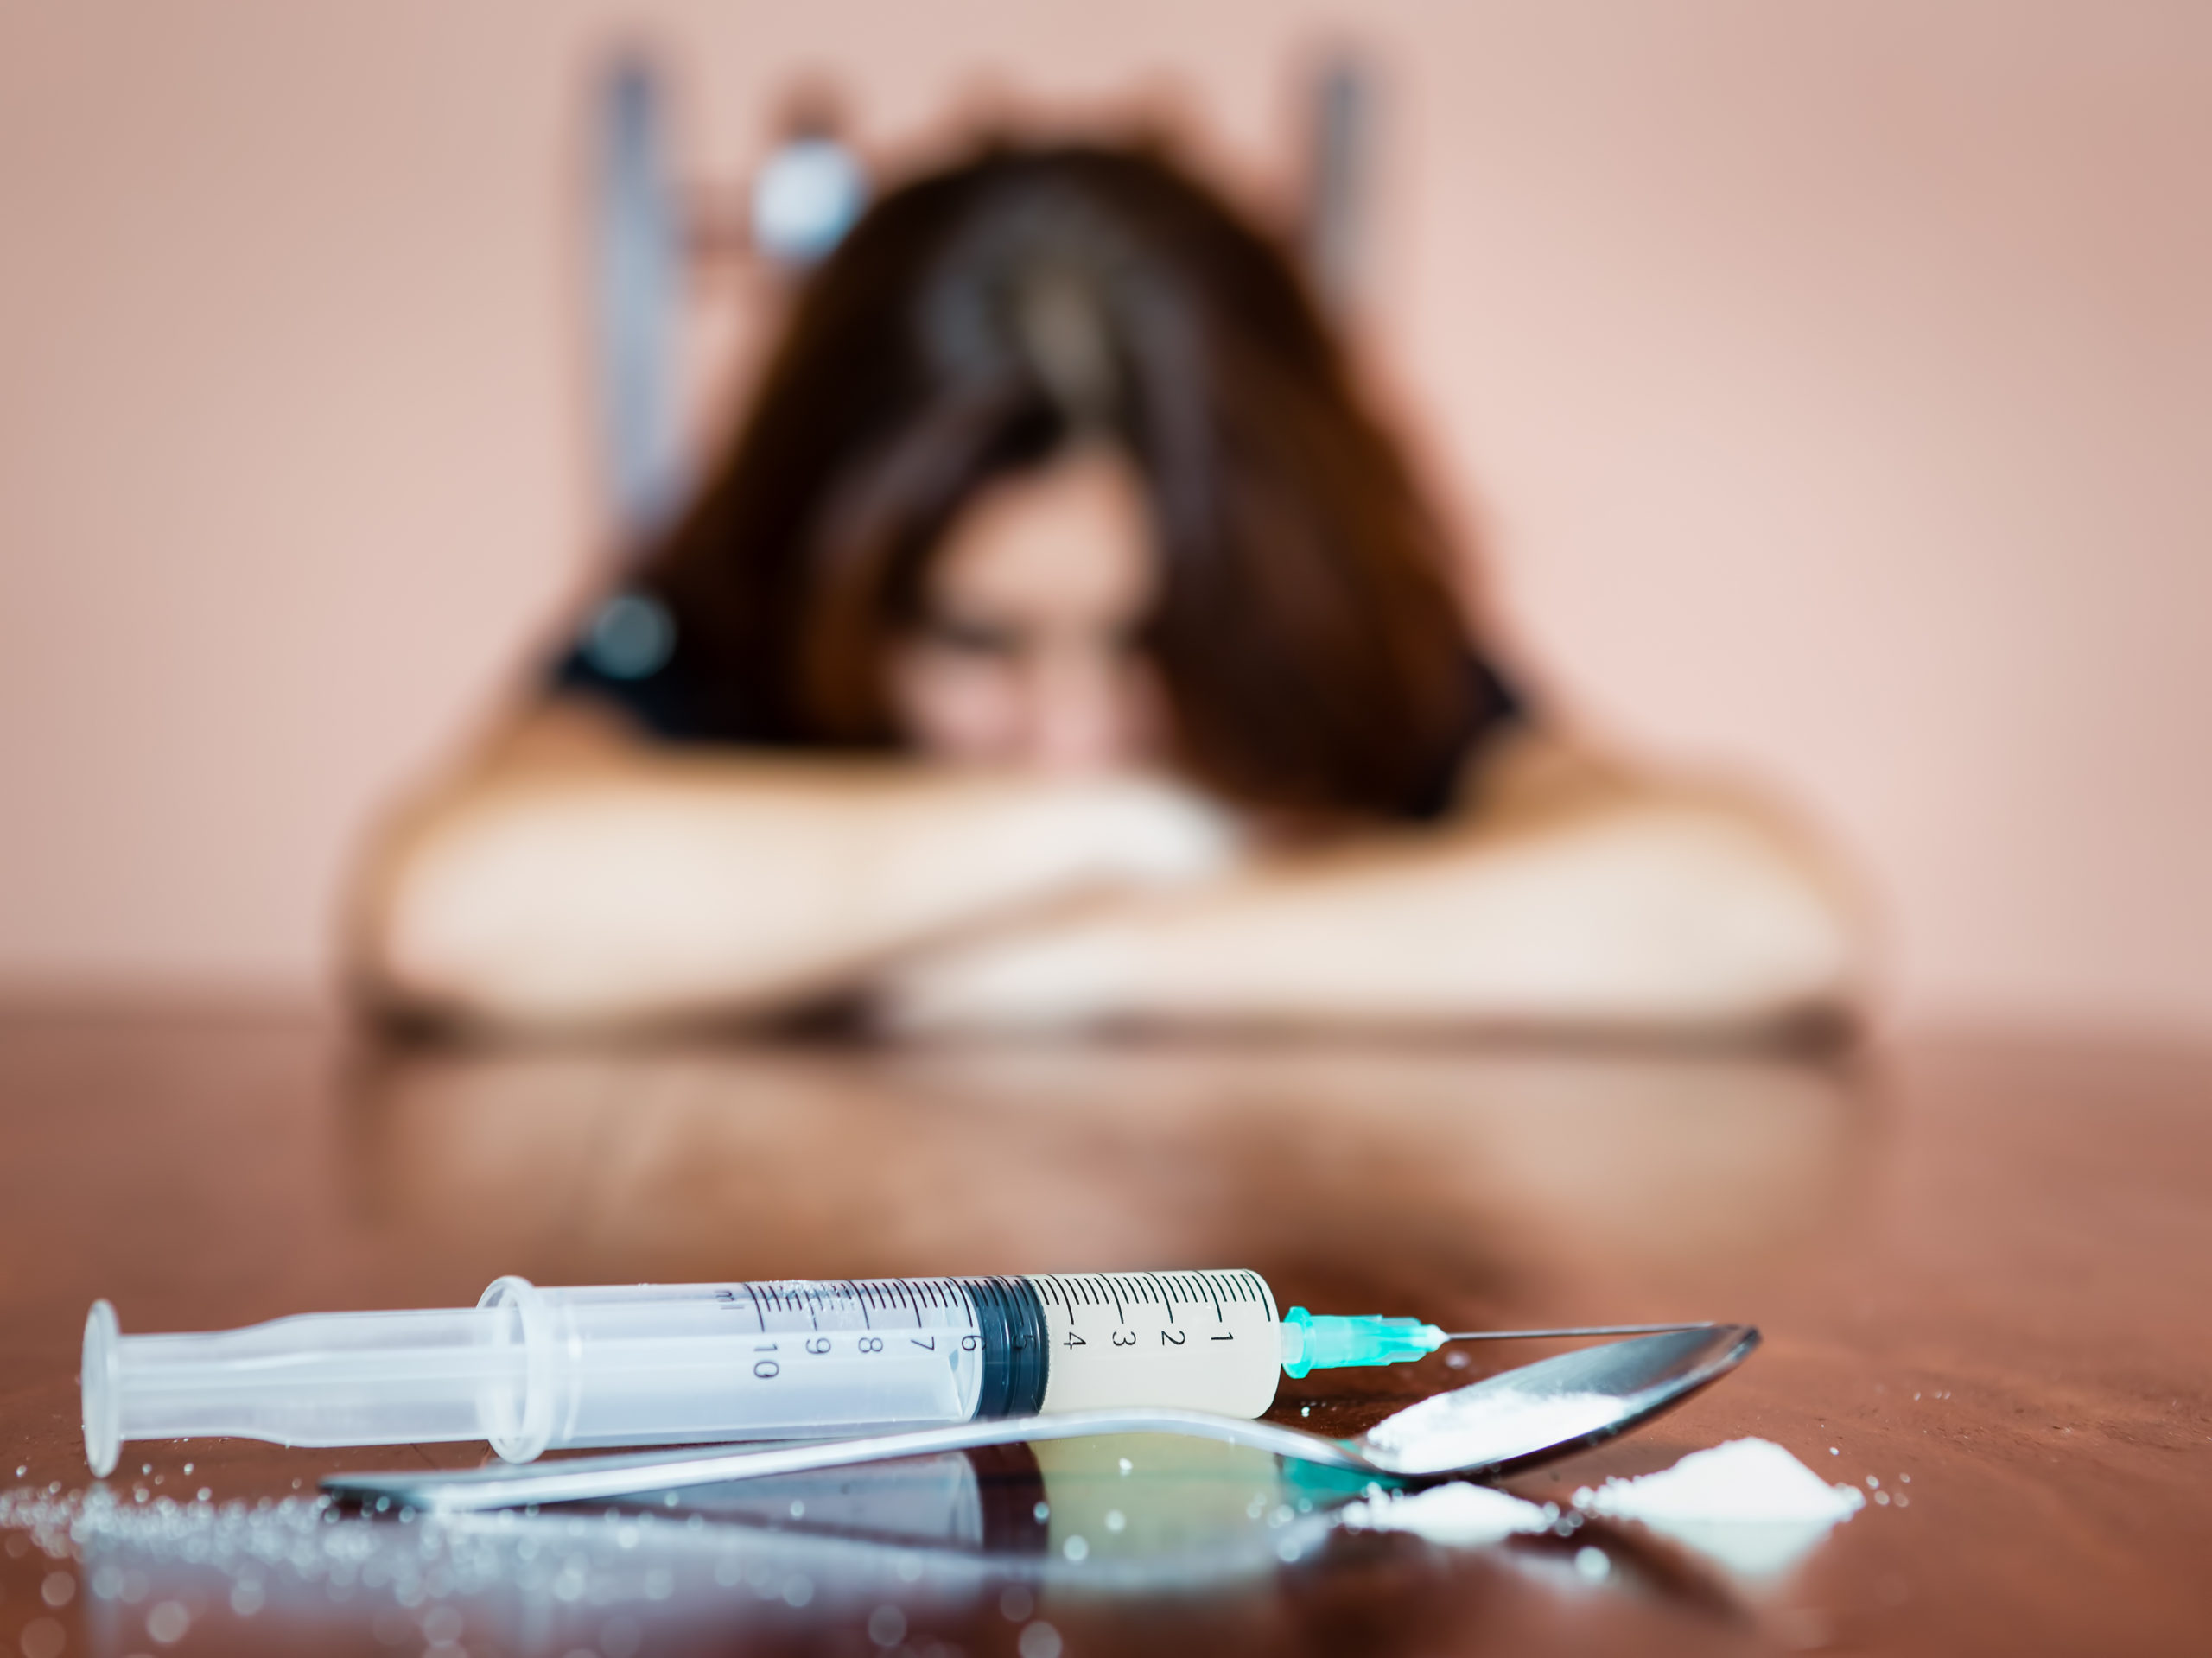 symptoms of heroin abuse